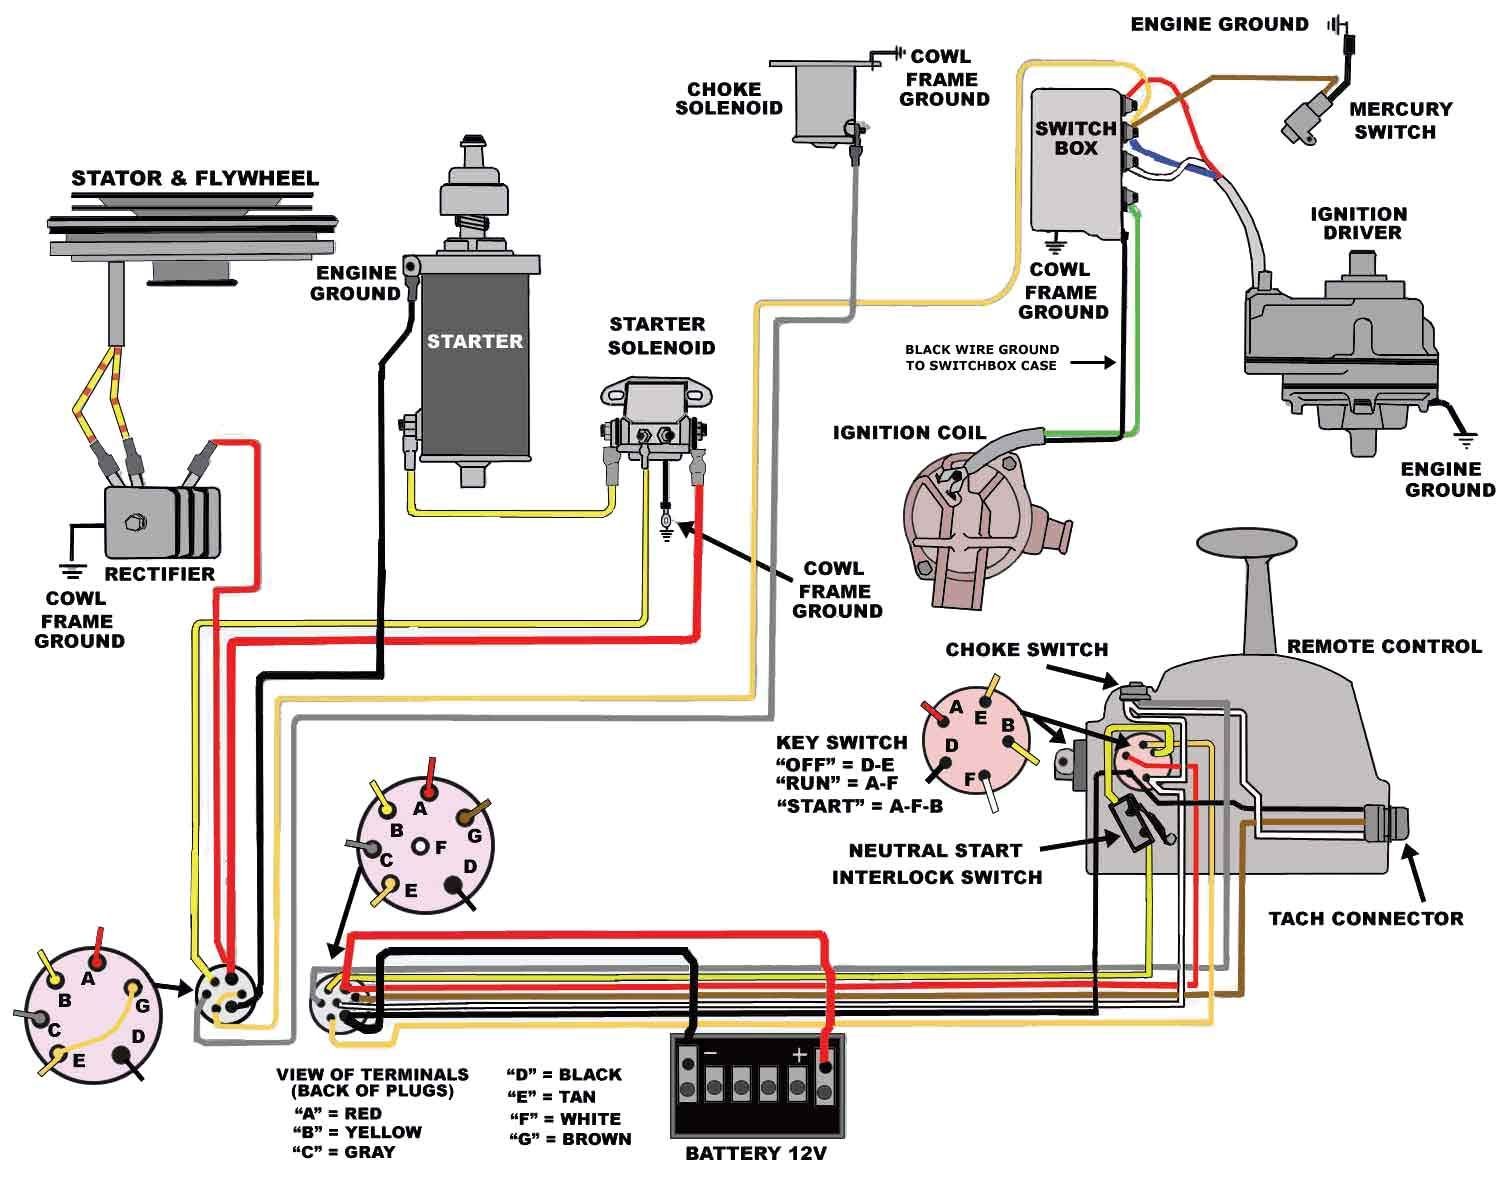 Outboard Motor Wiring Diagram | Manual E-Books - Wiring Diagram For Mercury Outboard Motor